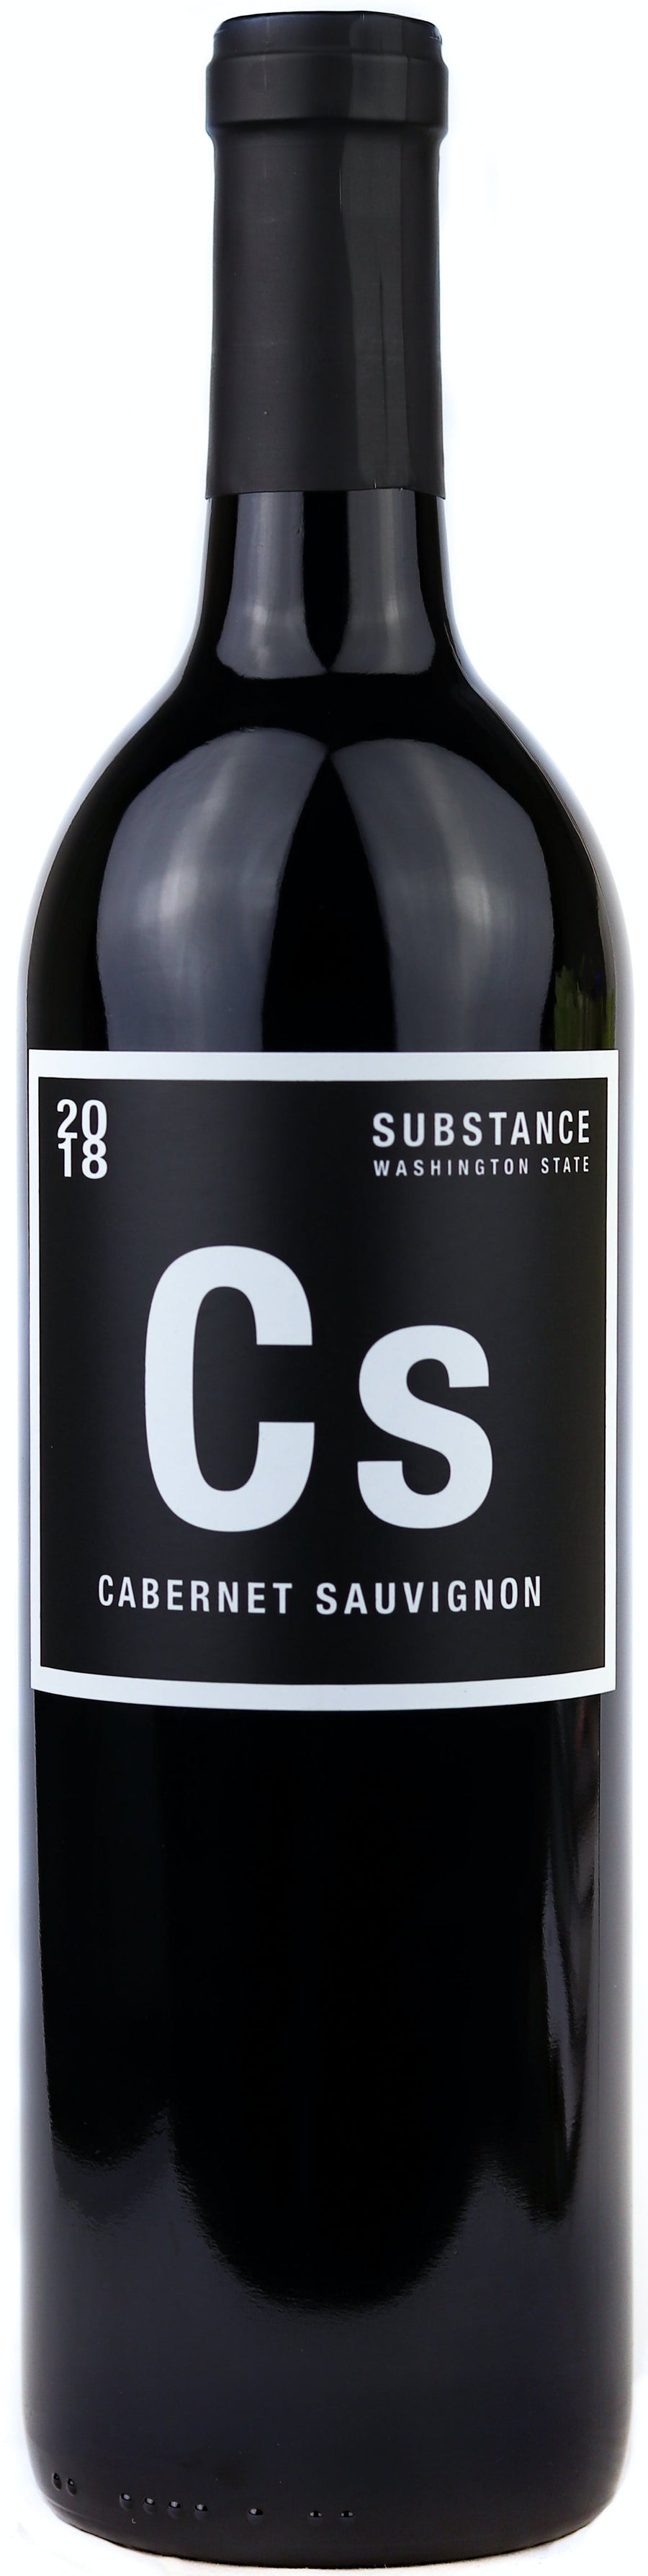 2019 Substance Cabernet Sauvignon, Columbia Valley